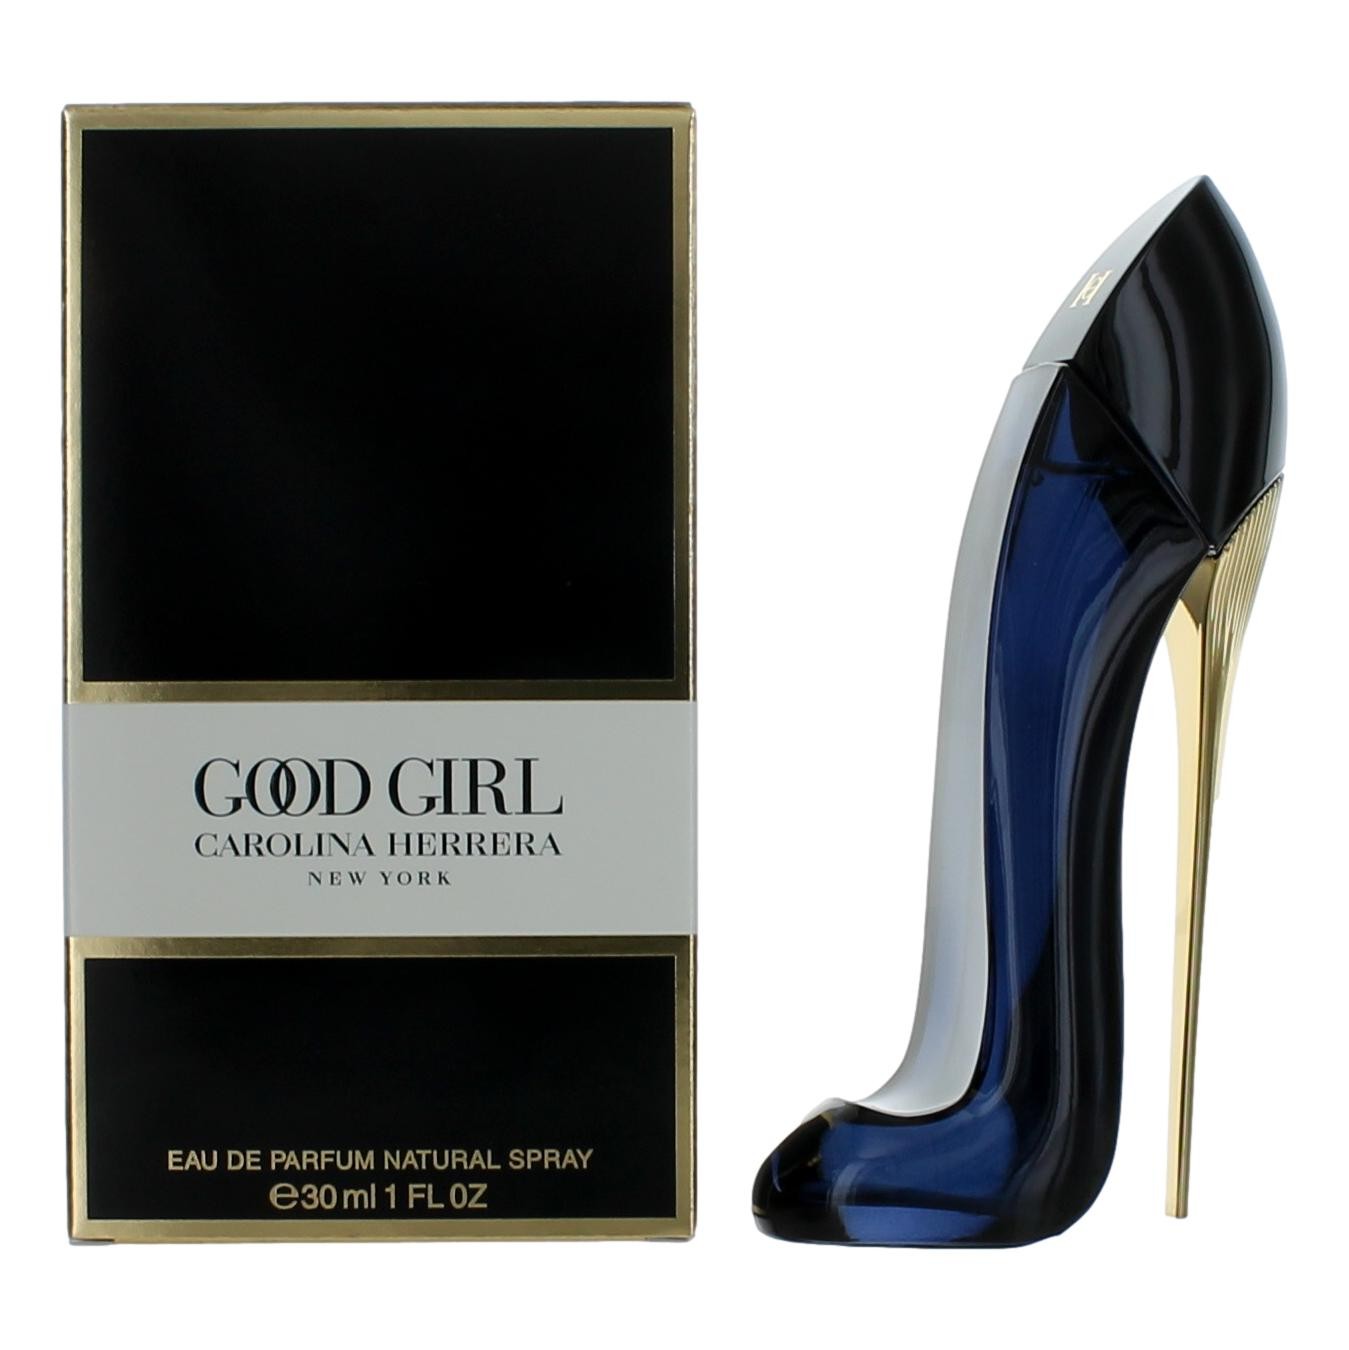 Good Girl by Carolina Herrera 1 oz Eau De Parfum Spray for Women